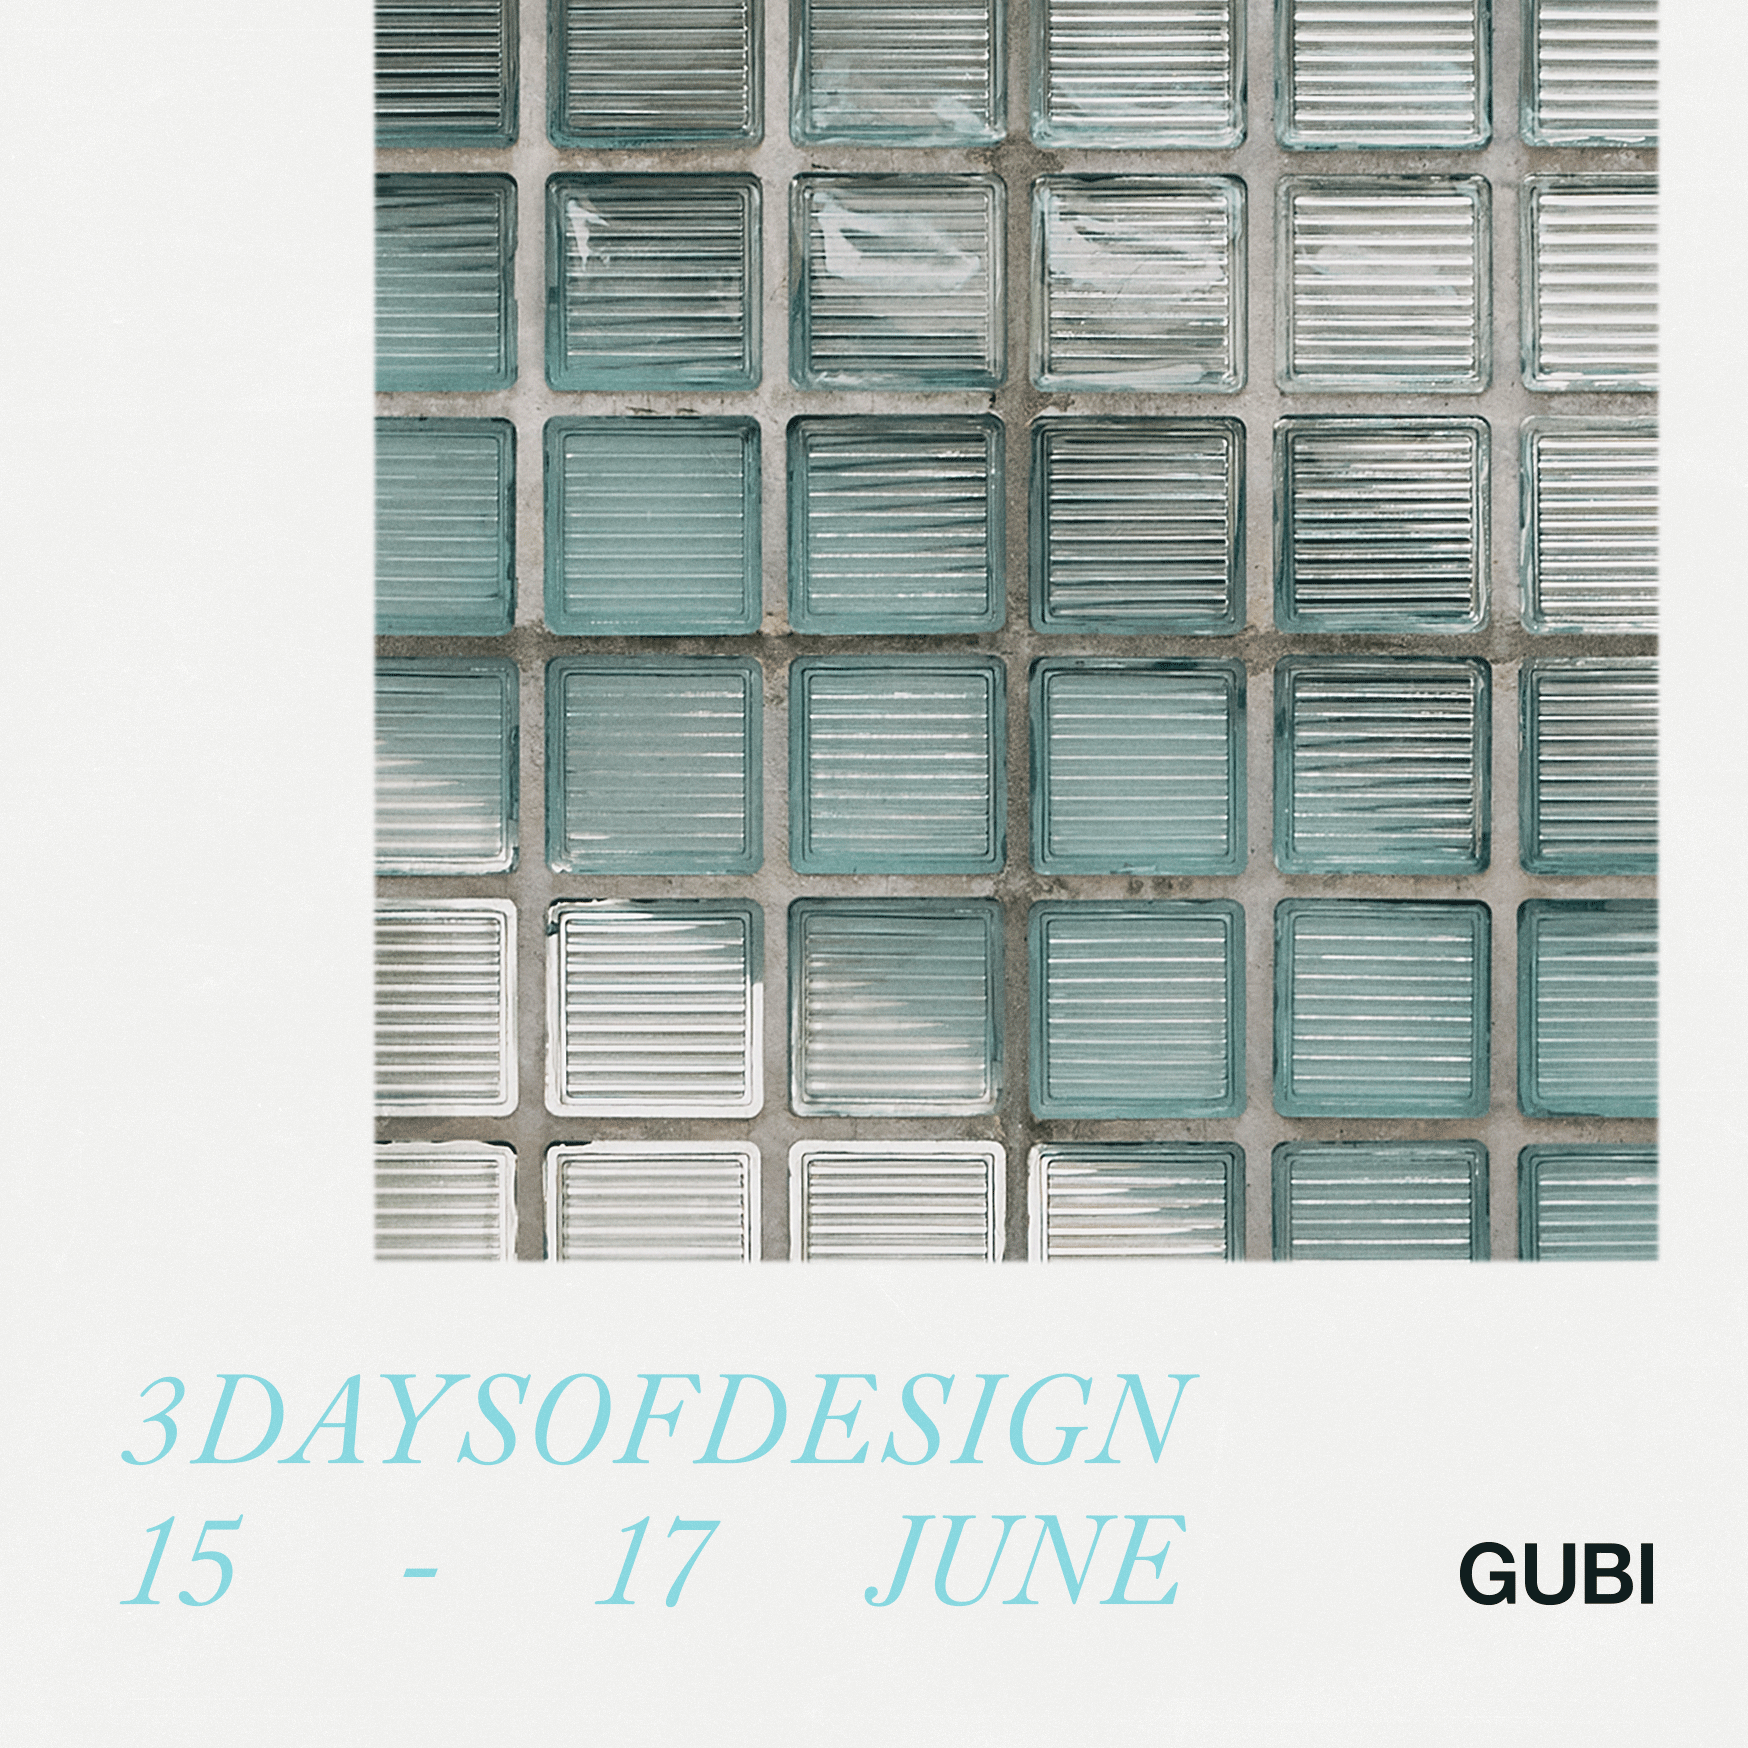 Invitation Gubi 3 days of design 